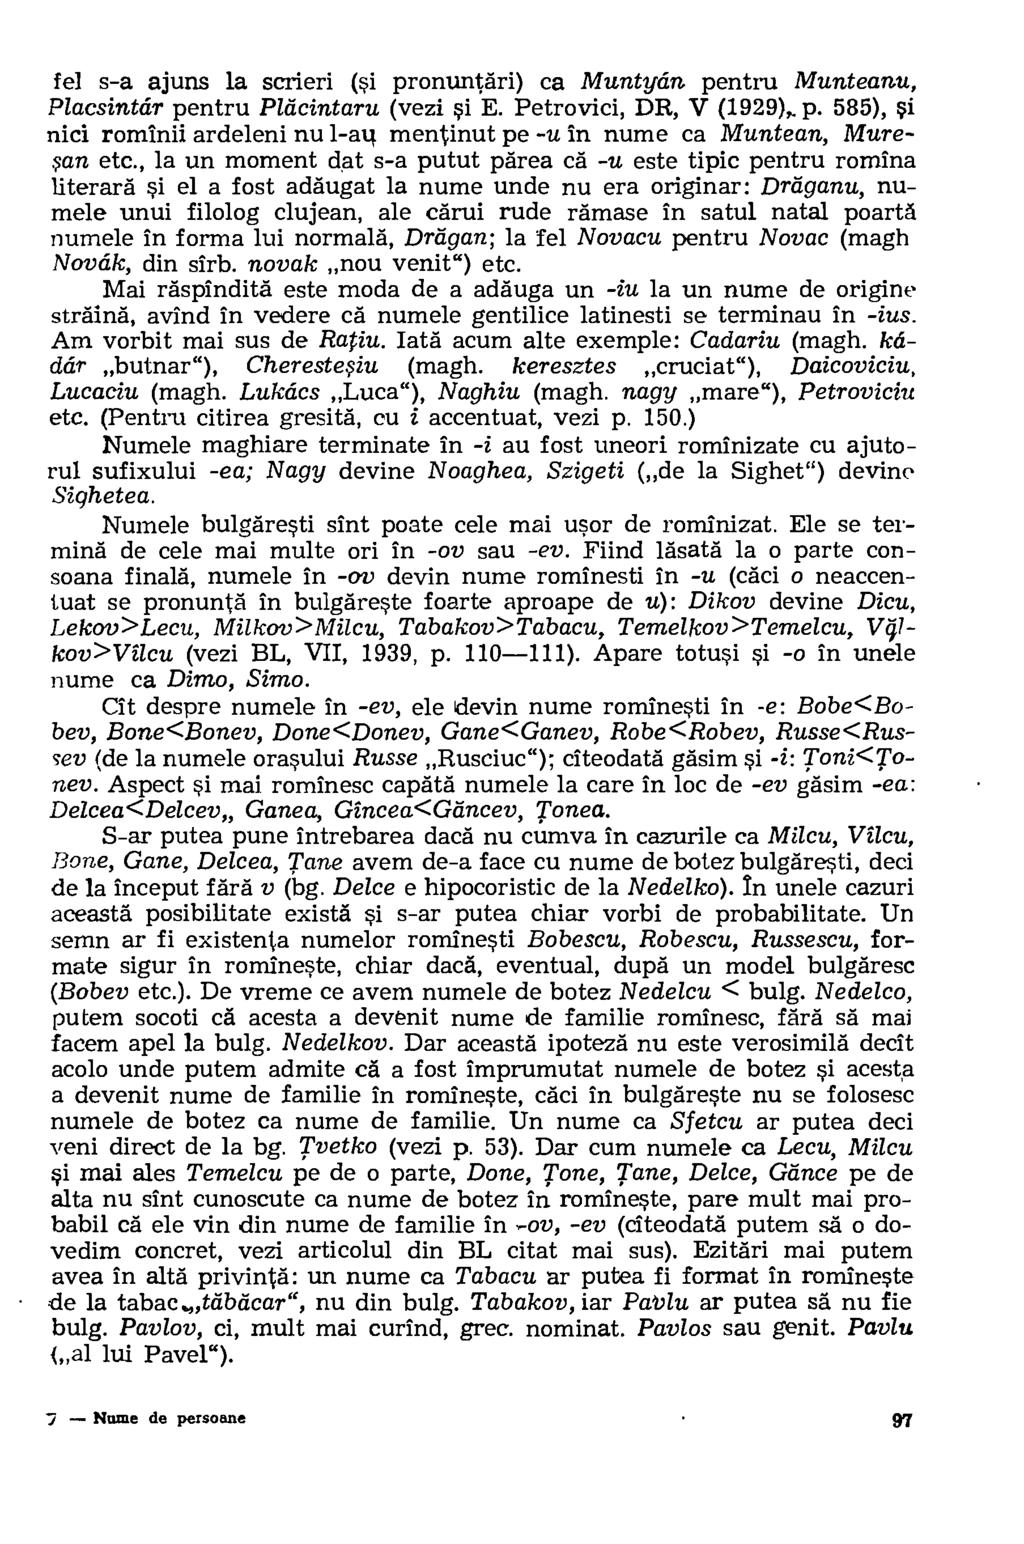 fel s-a ajuns la scrieri (si pronuntari) ca Muntycin pentru Munteanu, Piacsintar pentru Pia cintaru (vezi si E. Petrovici, DR, V (1929),. p. 585), 5i nici rominii ardeleni nul-au mentinut pe -u in nume ca Muntean, Muresan etc.